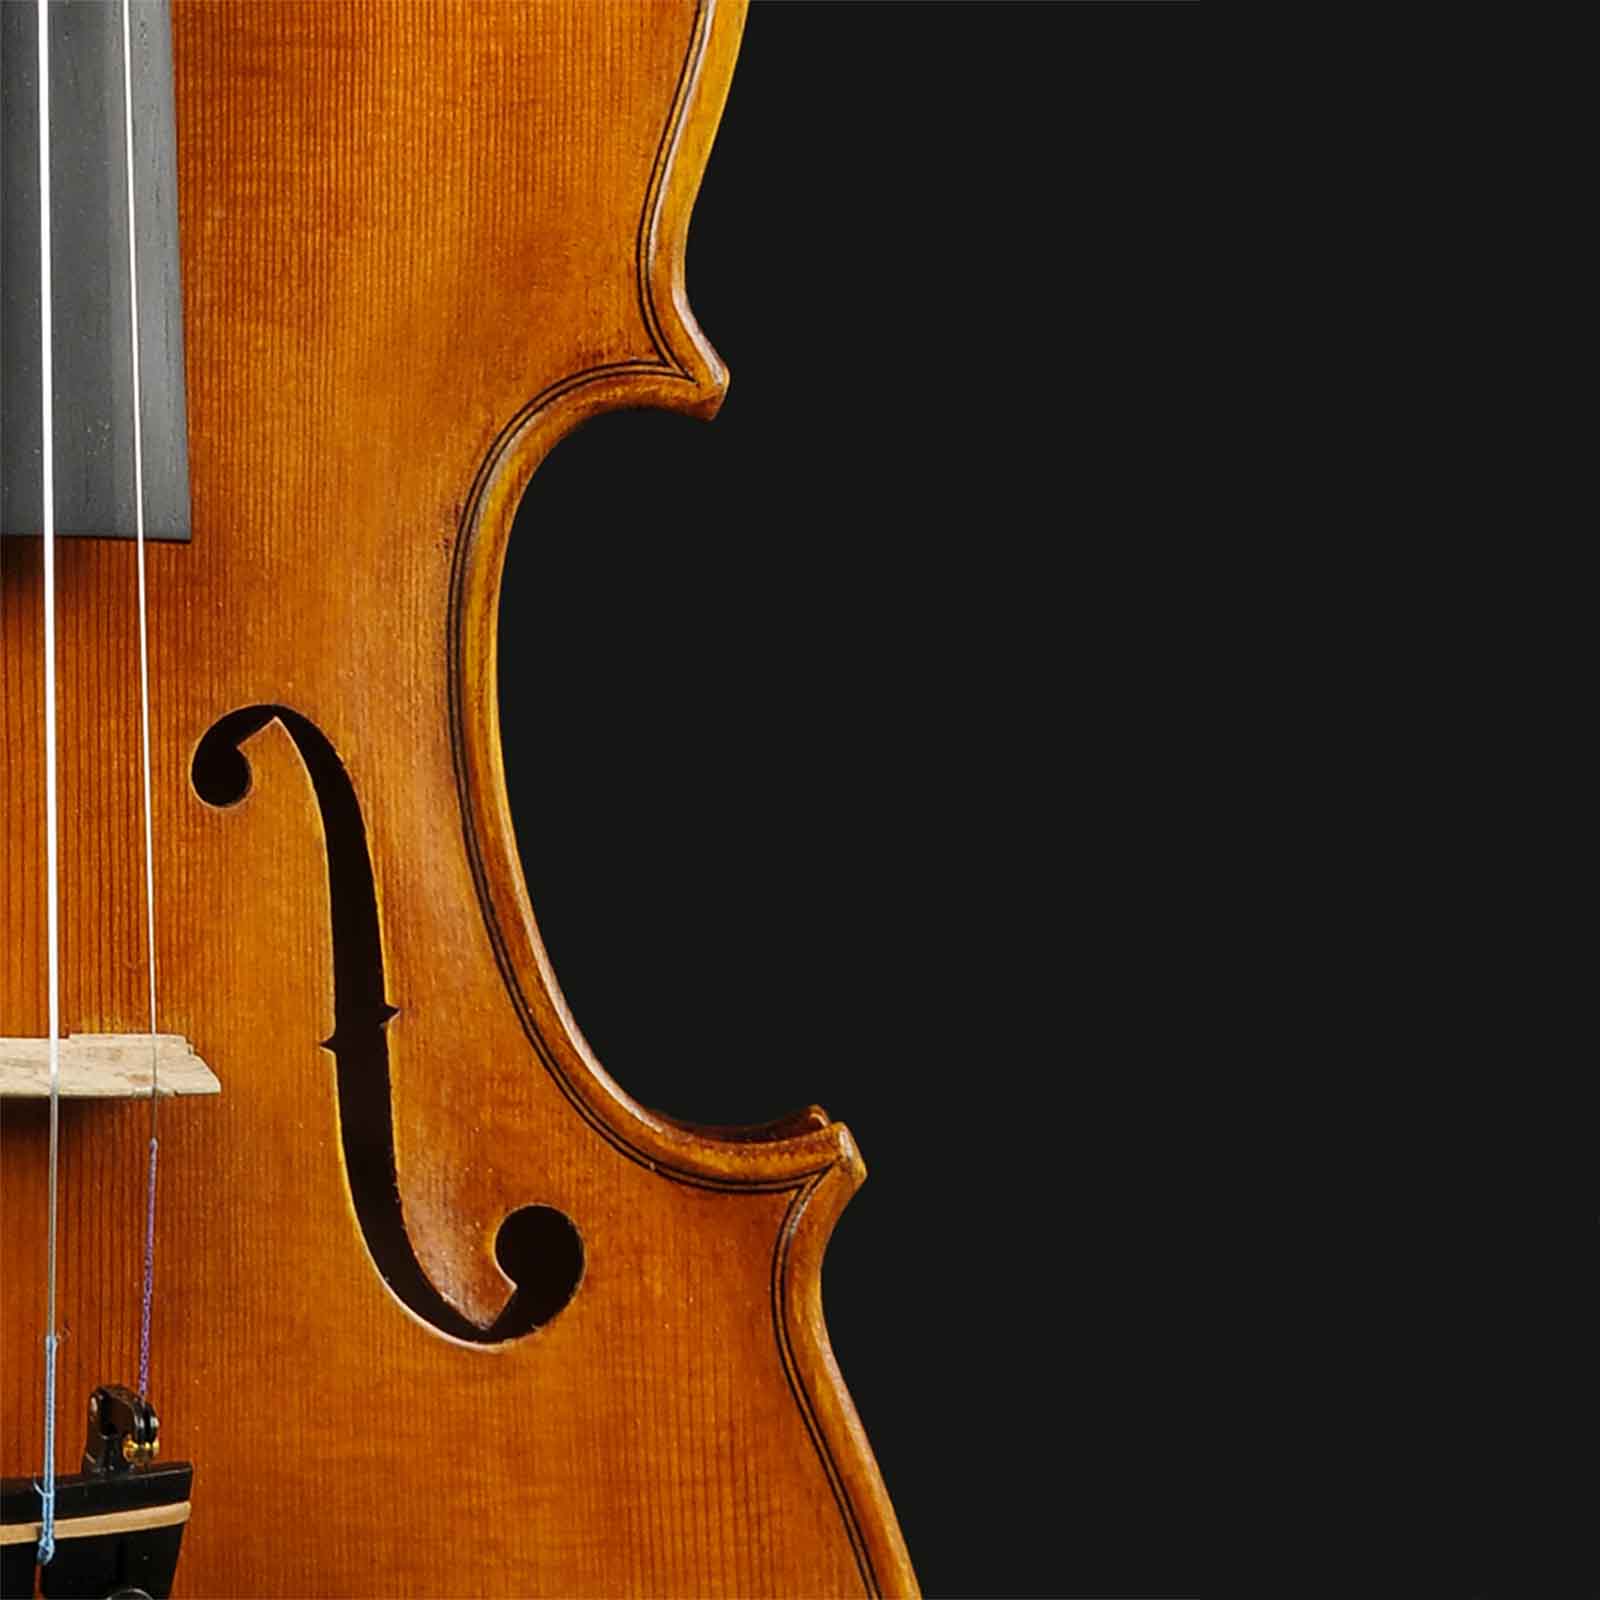 Antonio Stradivari Cremona 1717 “San Clemente“ - Image 3